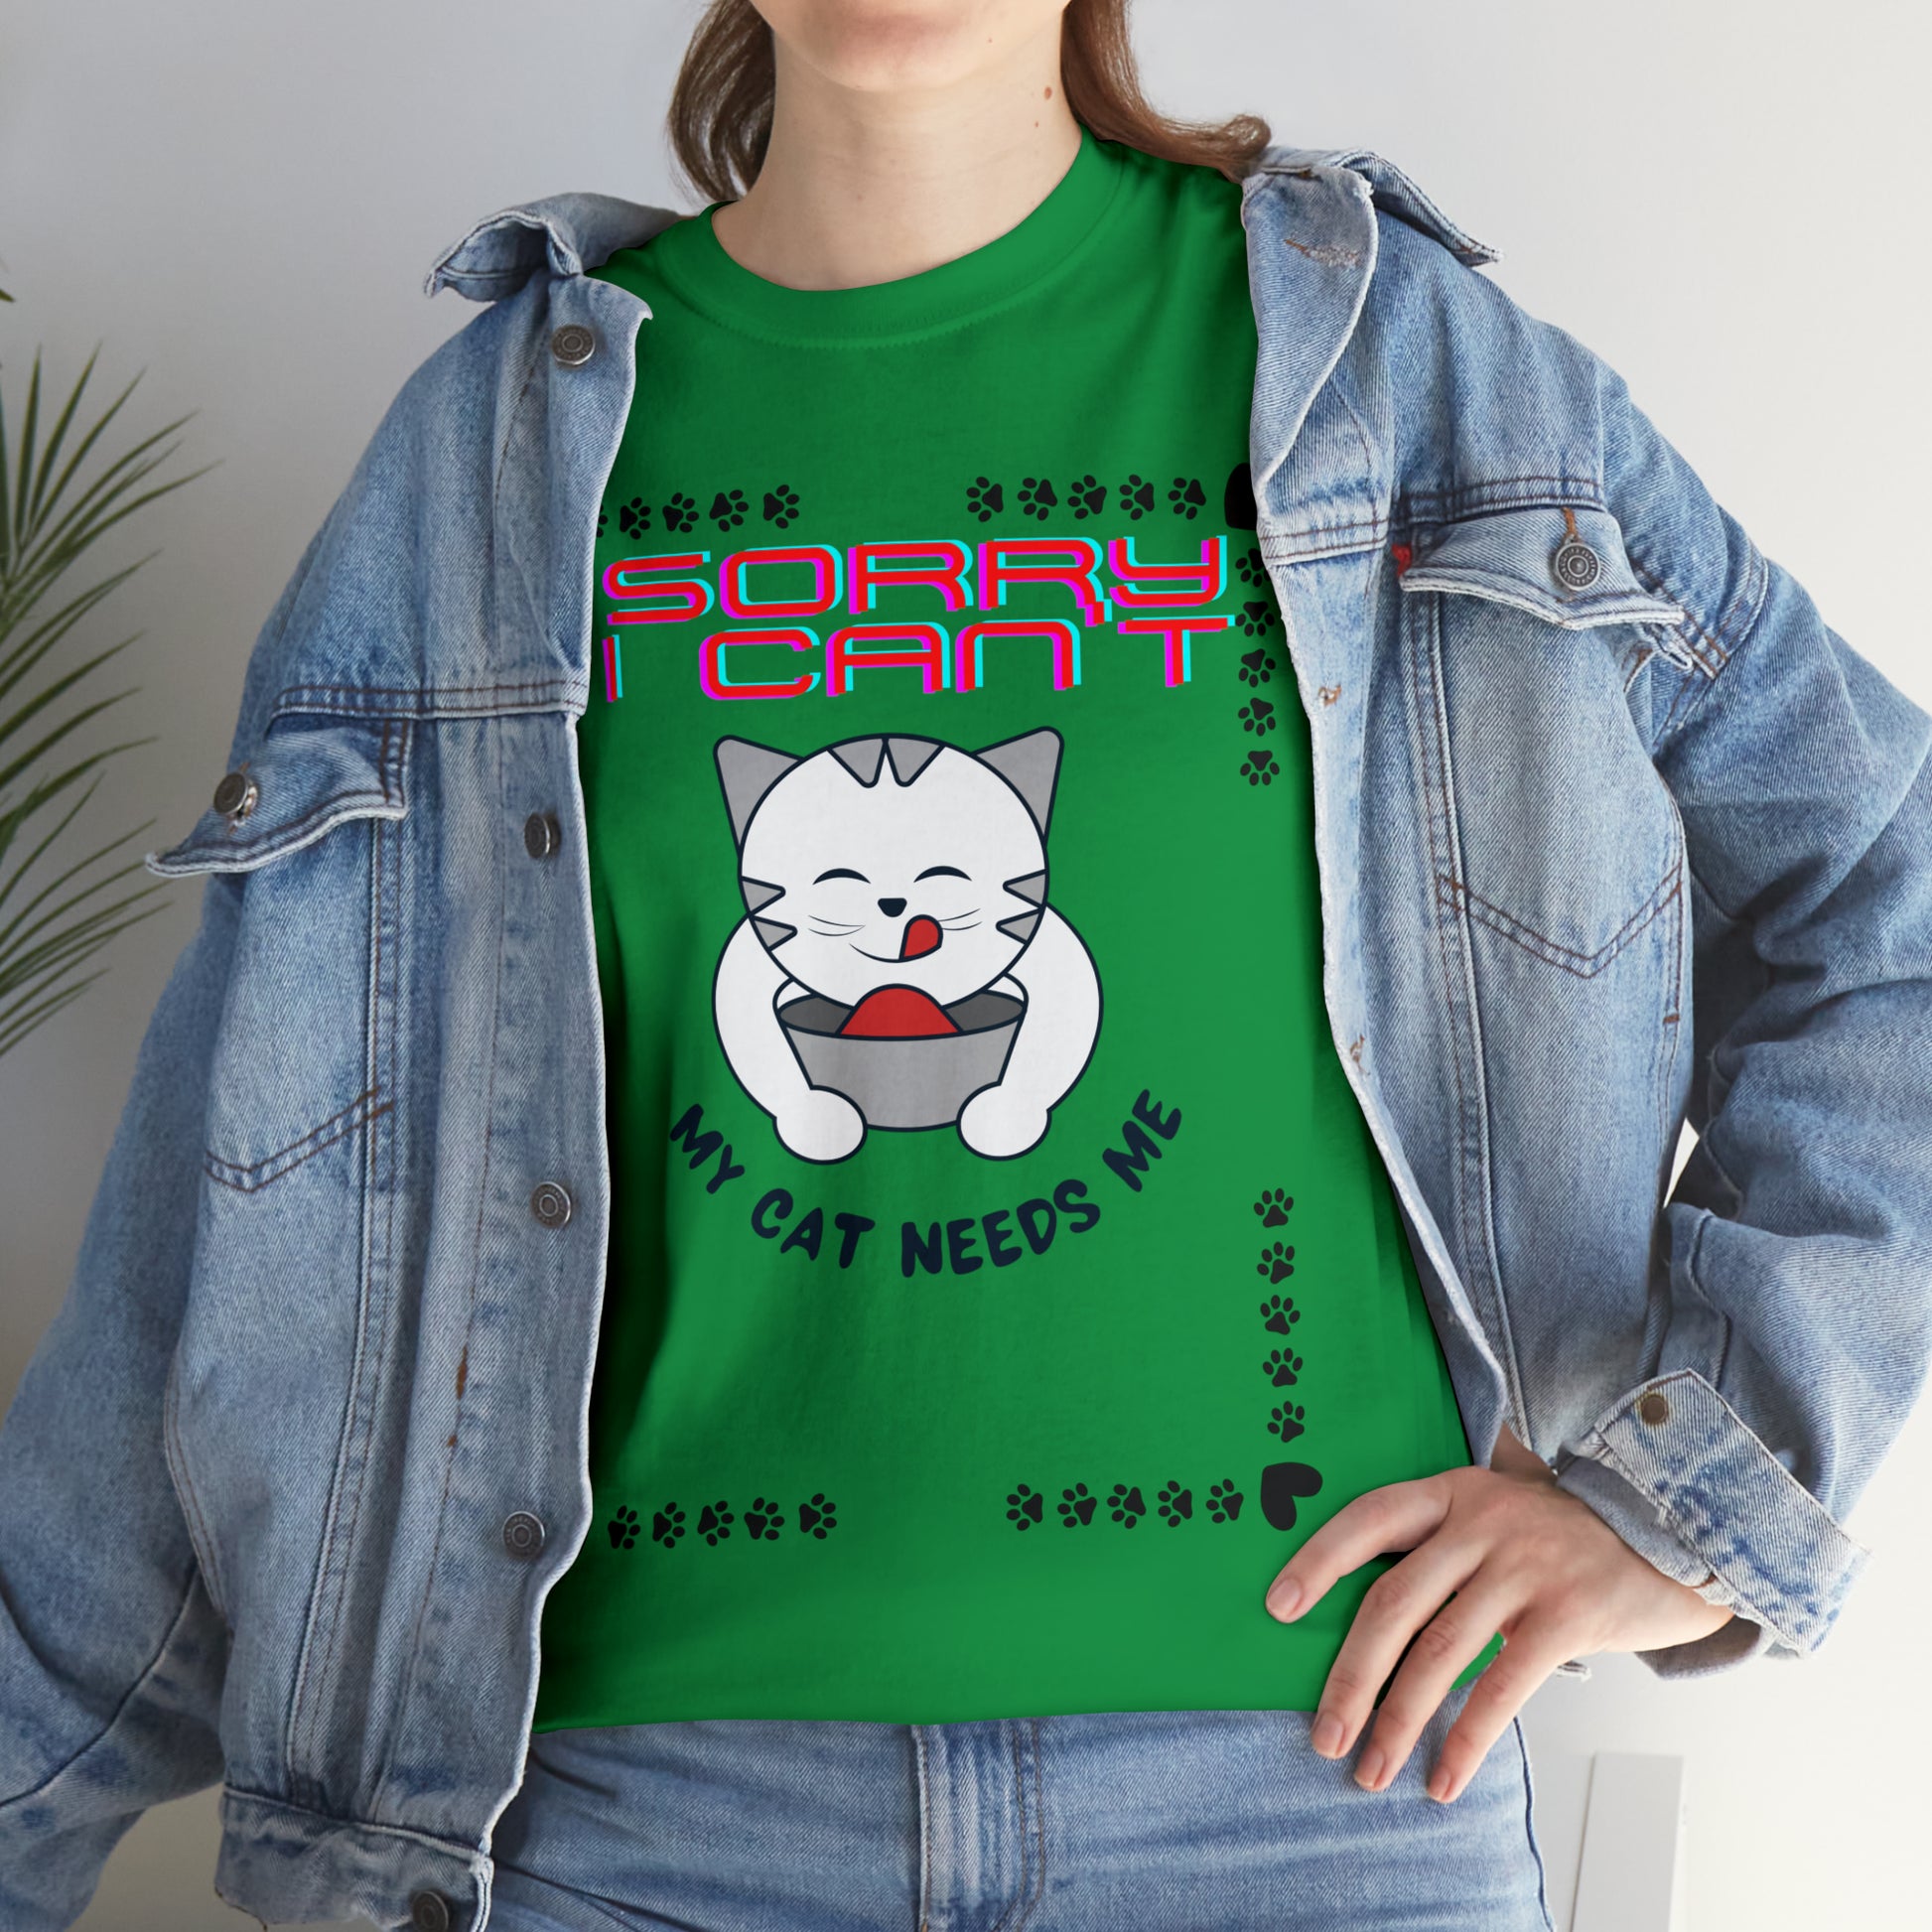 Sorry I Can't My Cat Needs Me T-Shirt | Cat Mom Shirt | Cat Lover Gift | Cat Mom Gift | Animal Lover Gift for Women T-Shirt Irish Green S 